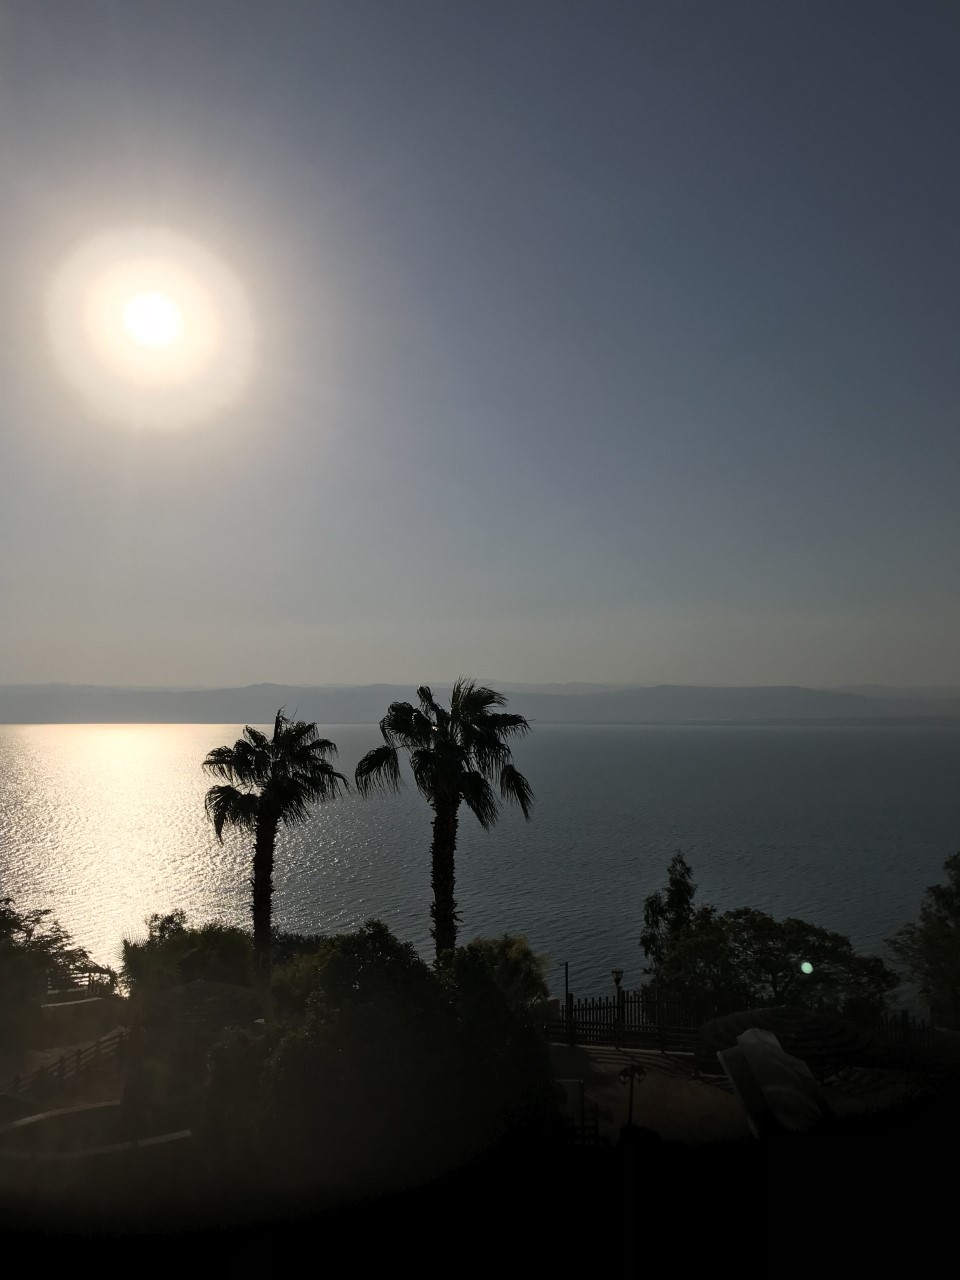 Lea in Egypt Looking over the Dead Sea in Jorden